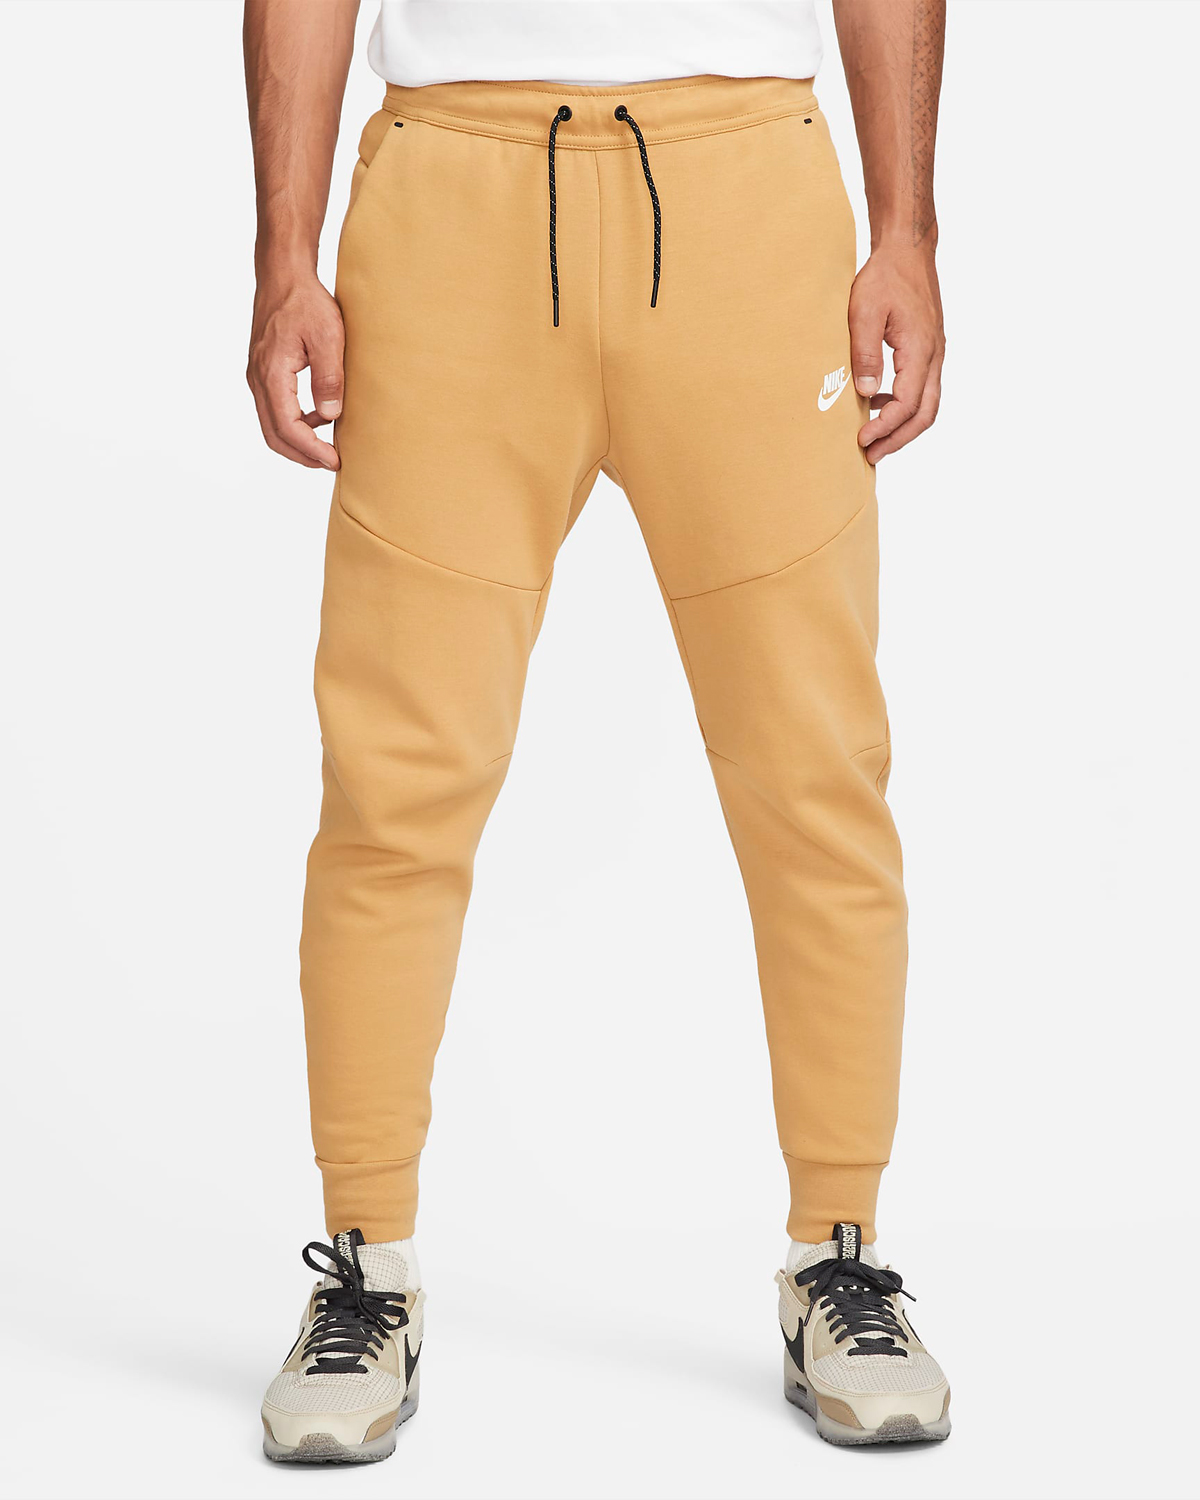 Nike-Tech-Fleece-Jogger-Pants-Elemental-Gold